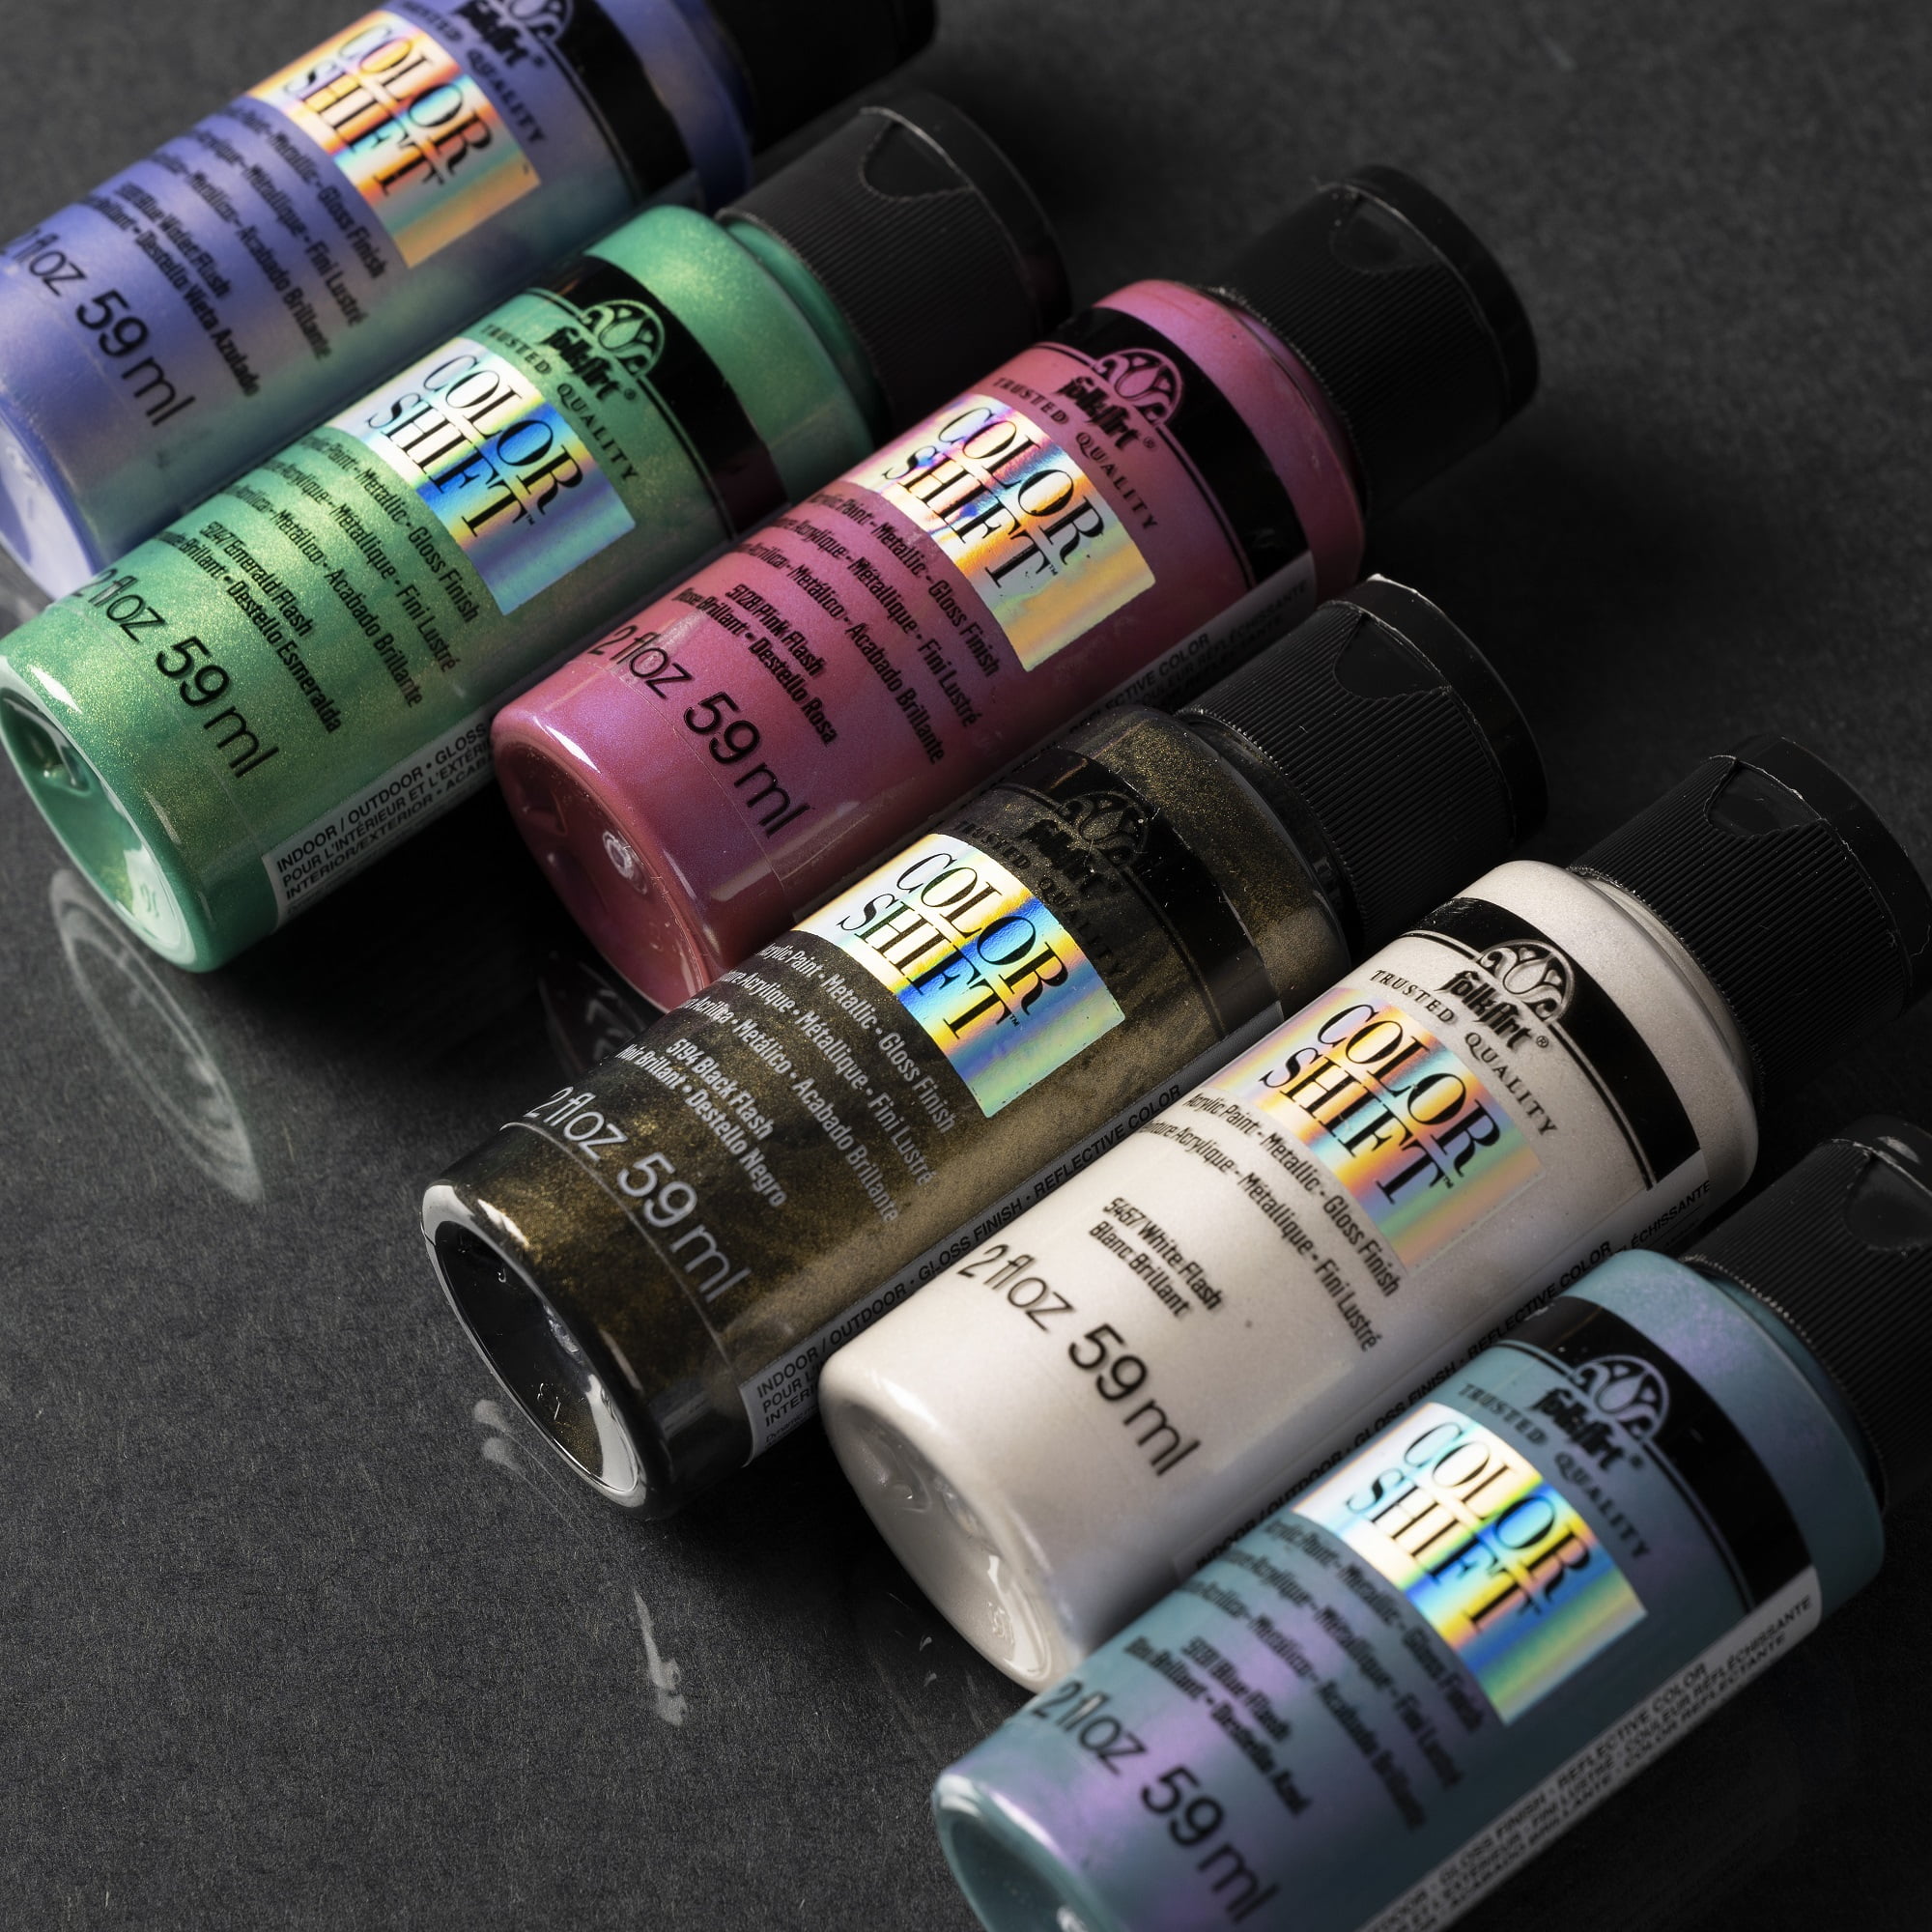 12 Pack: FolkArt® Color Shift™ Gloss Finish Metallic Acrylic Paint